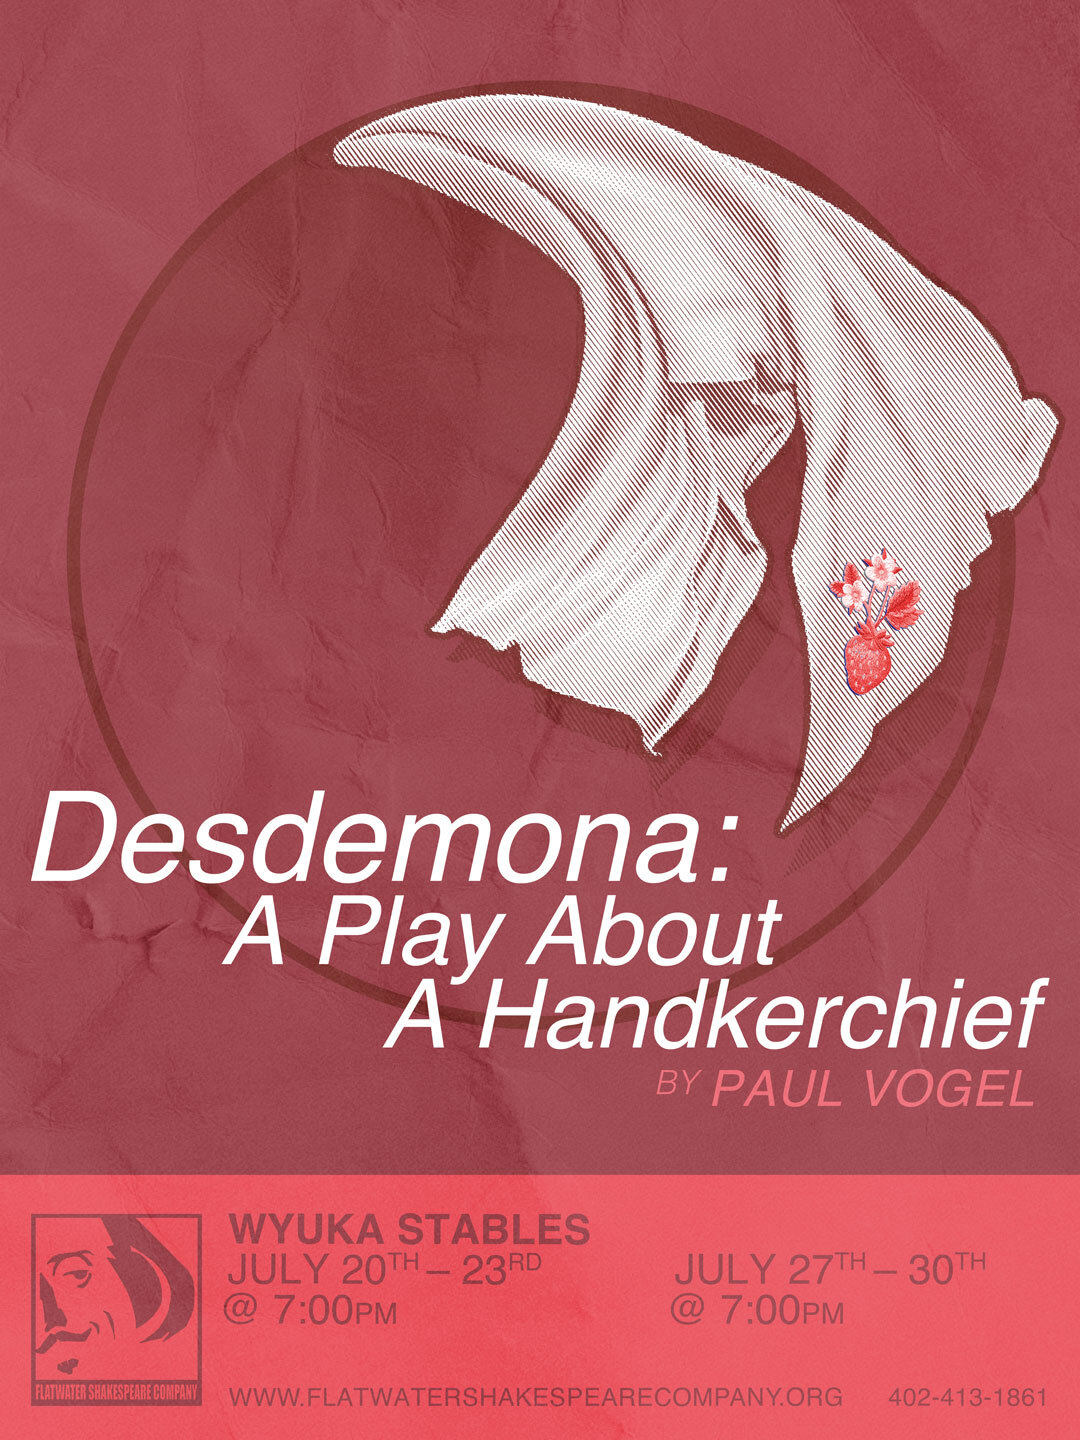 7/30 SEN - SENIOR (65+): Sun. July 30, 2023 | 7:00 p.m. - 10:00 p.m. CST | Wyuka Stables (Desdemona: A Play about a Handkerchief)